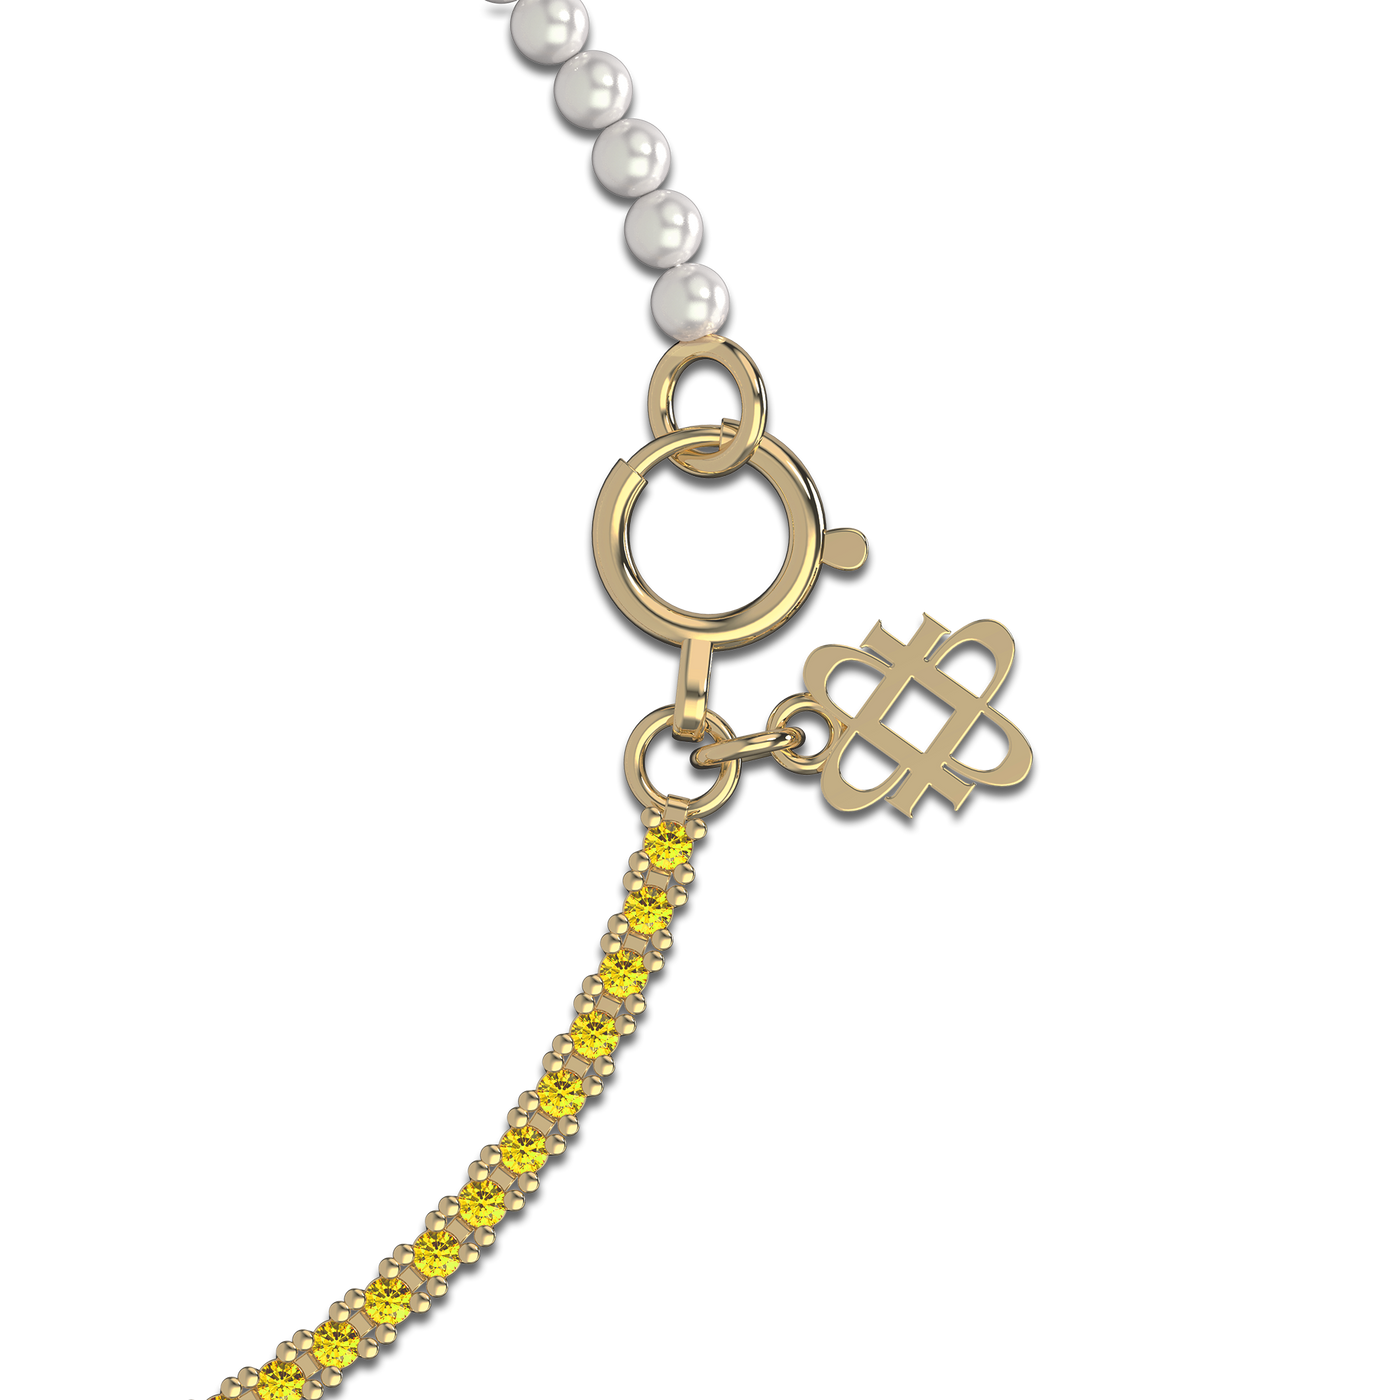 Fusion Diamant Perlen Armband